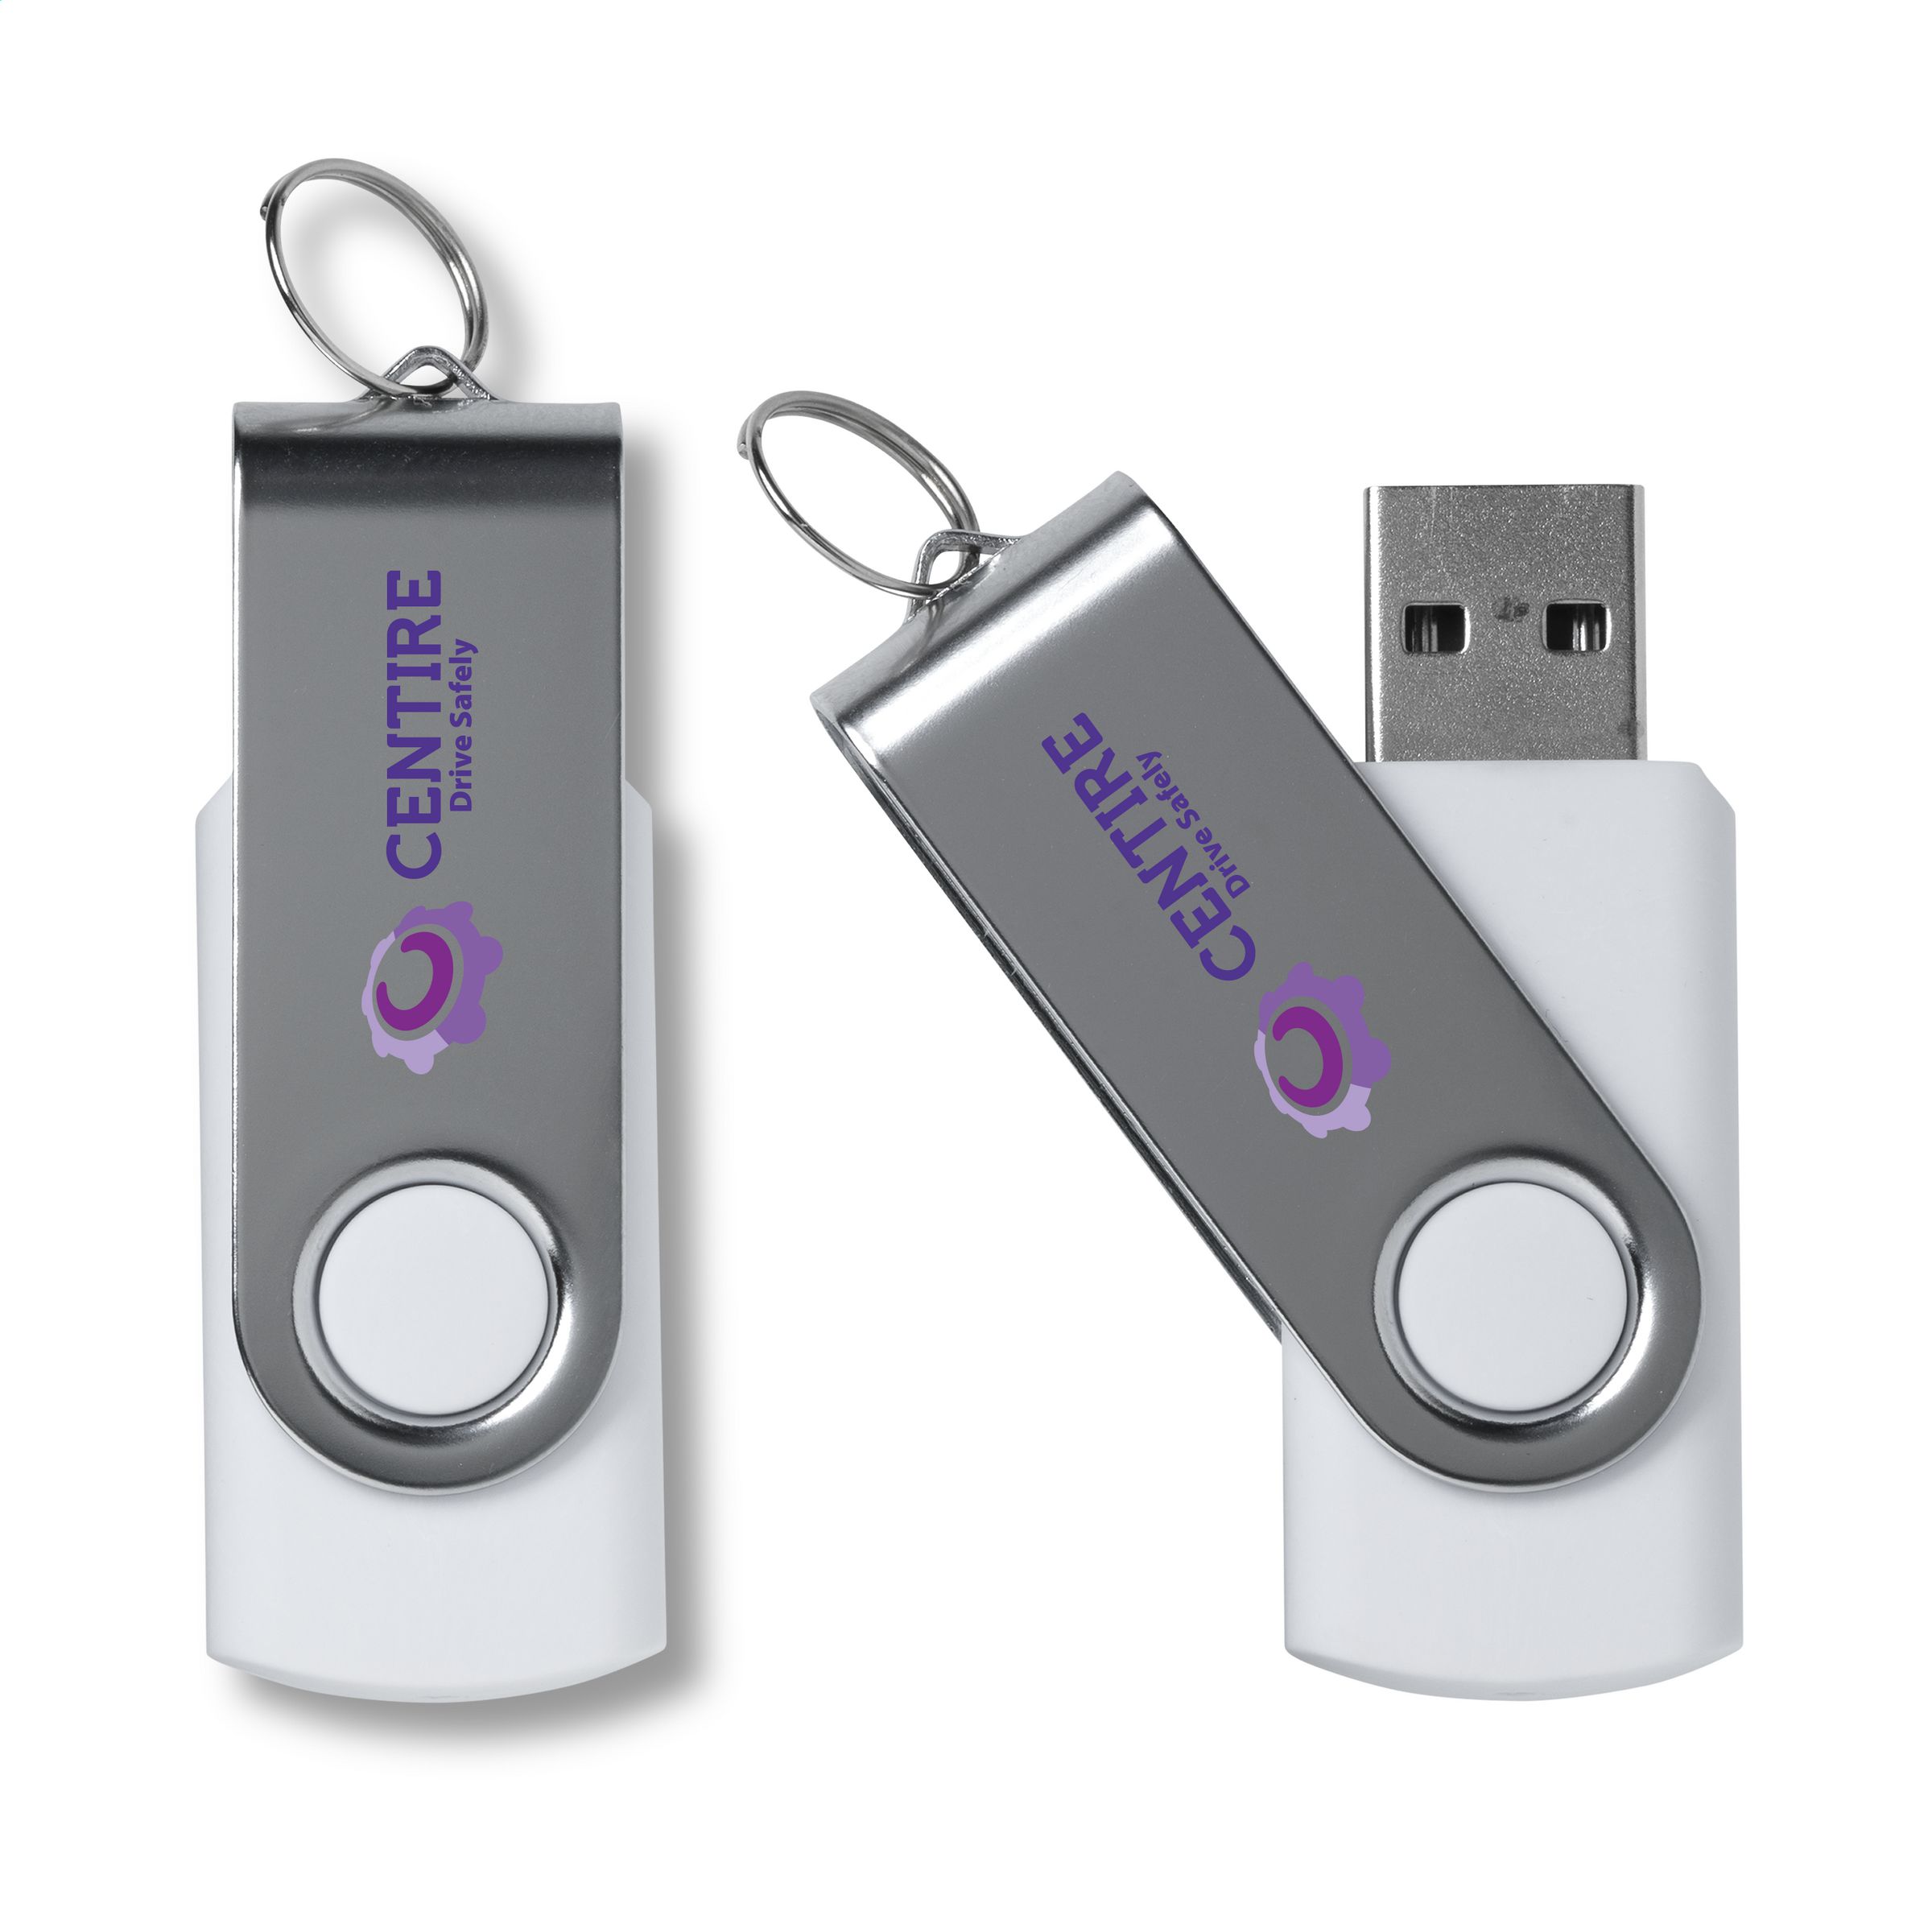 QuickDrive USB - Harbledown - San Millán/Donemiliaga